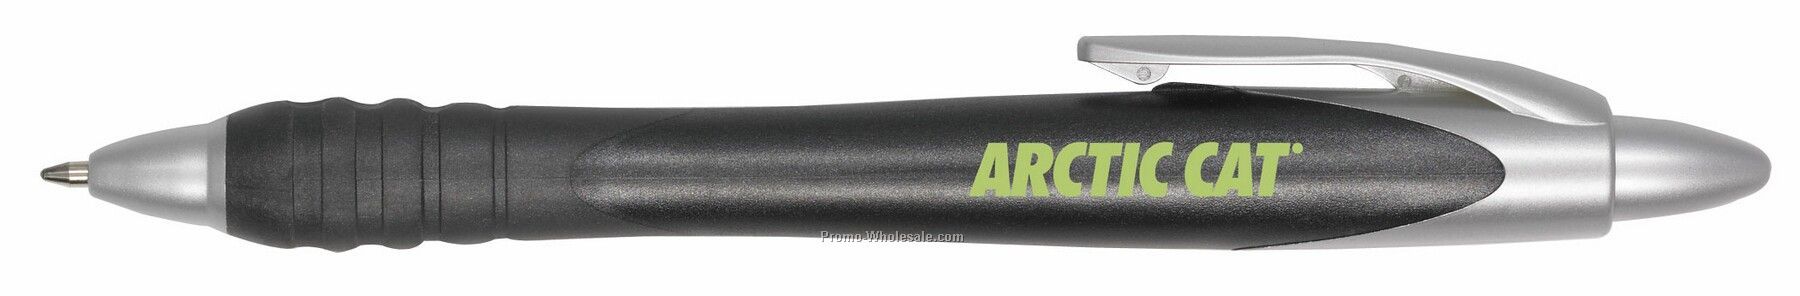 Olympia Metallic Barrel Pen With Matching Grip